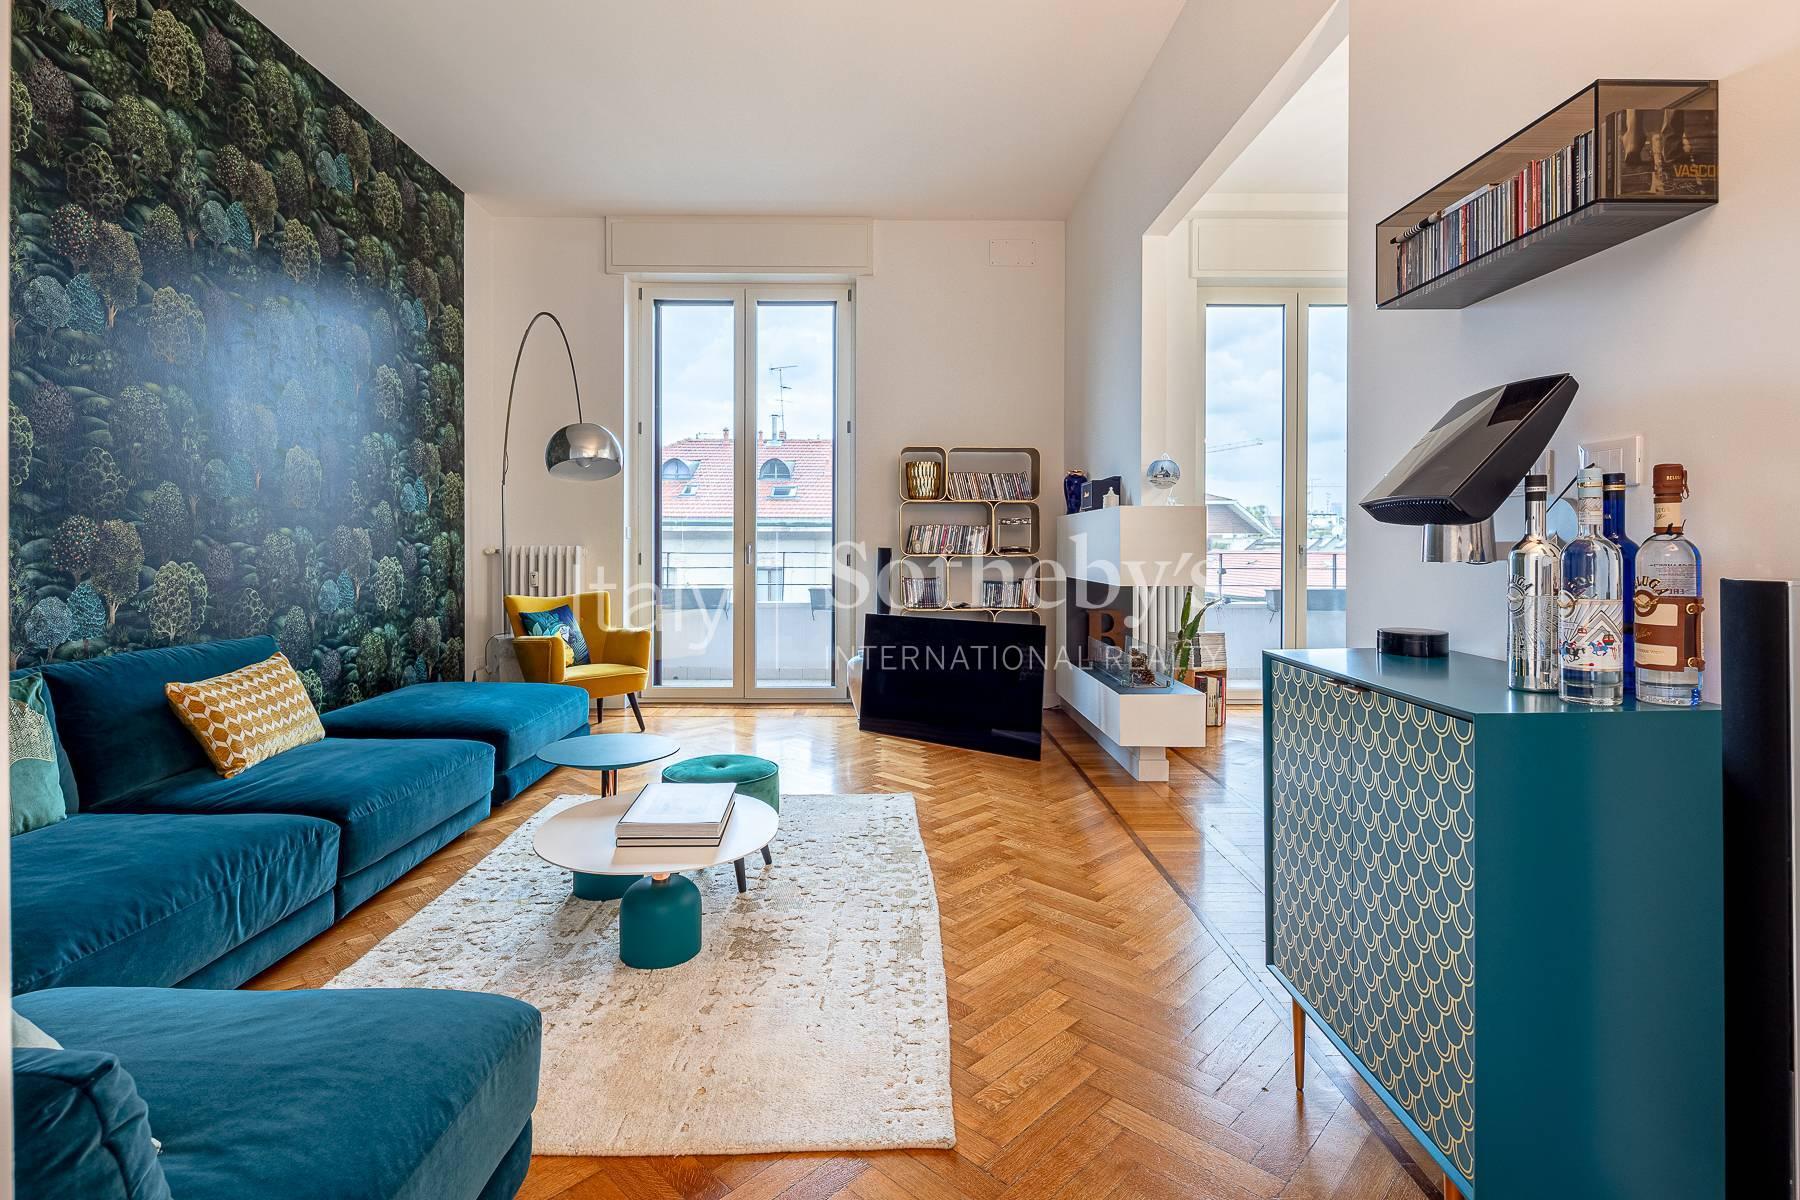 Superb furnished apartment in the Bianca di Savoia / Quadronno area - 2